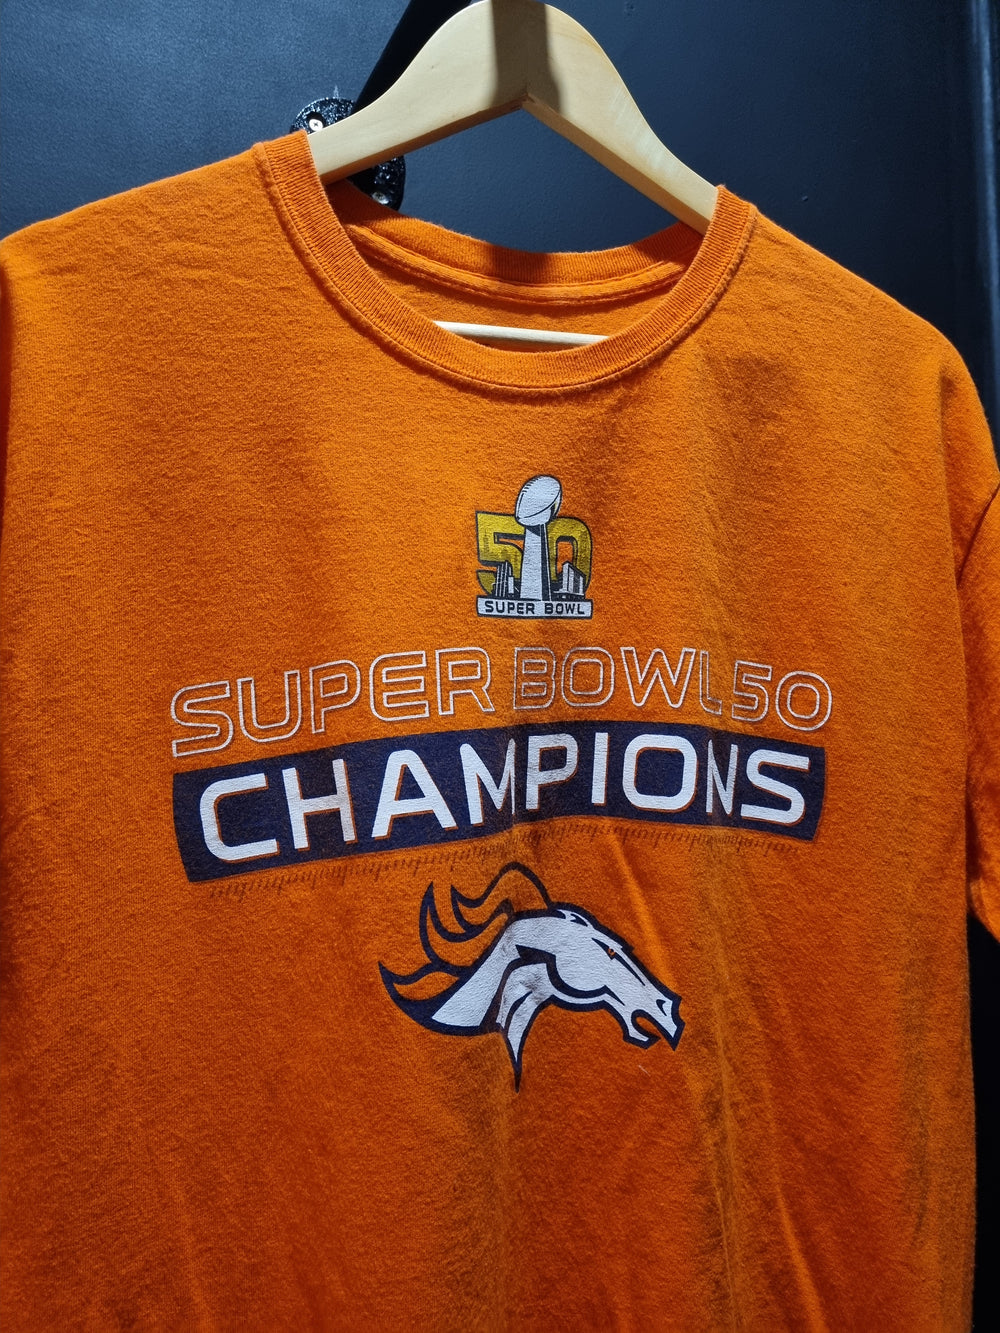 Super Bowl 50 Champion Broncos Team Shirt Large